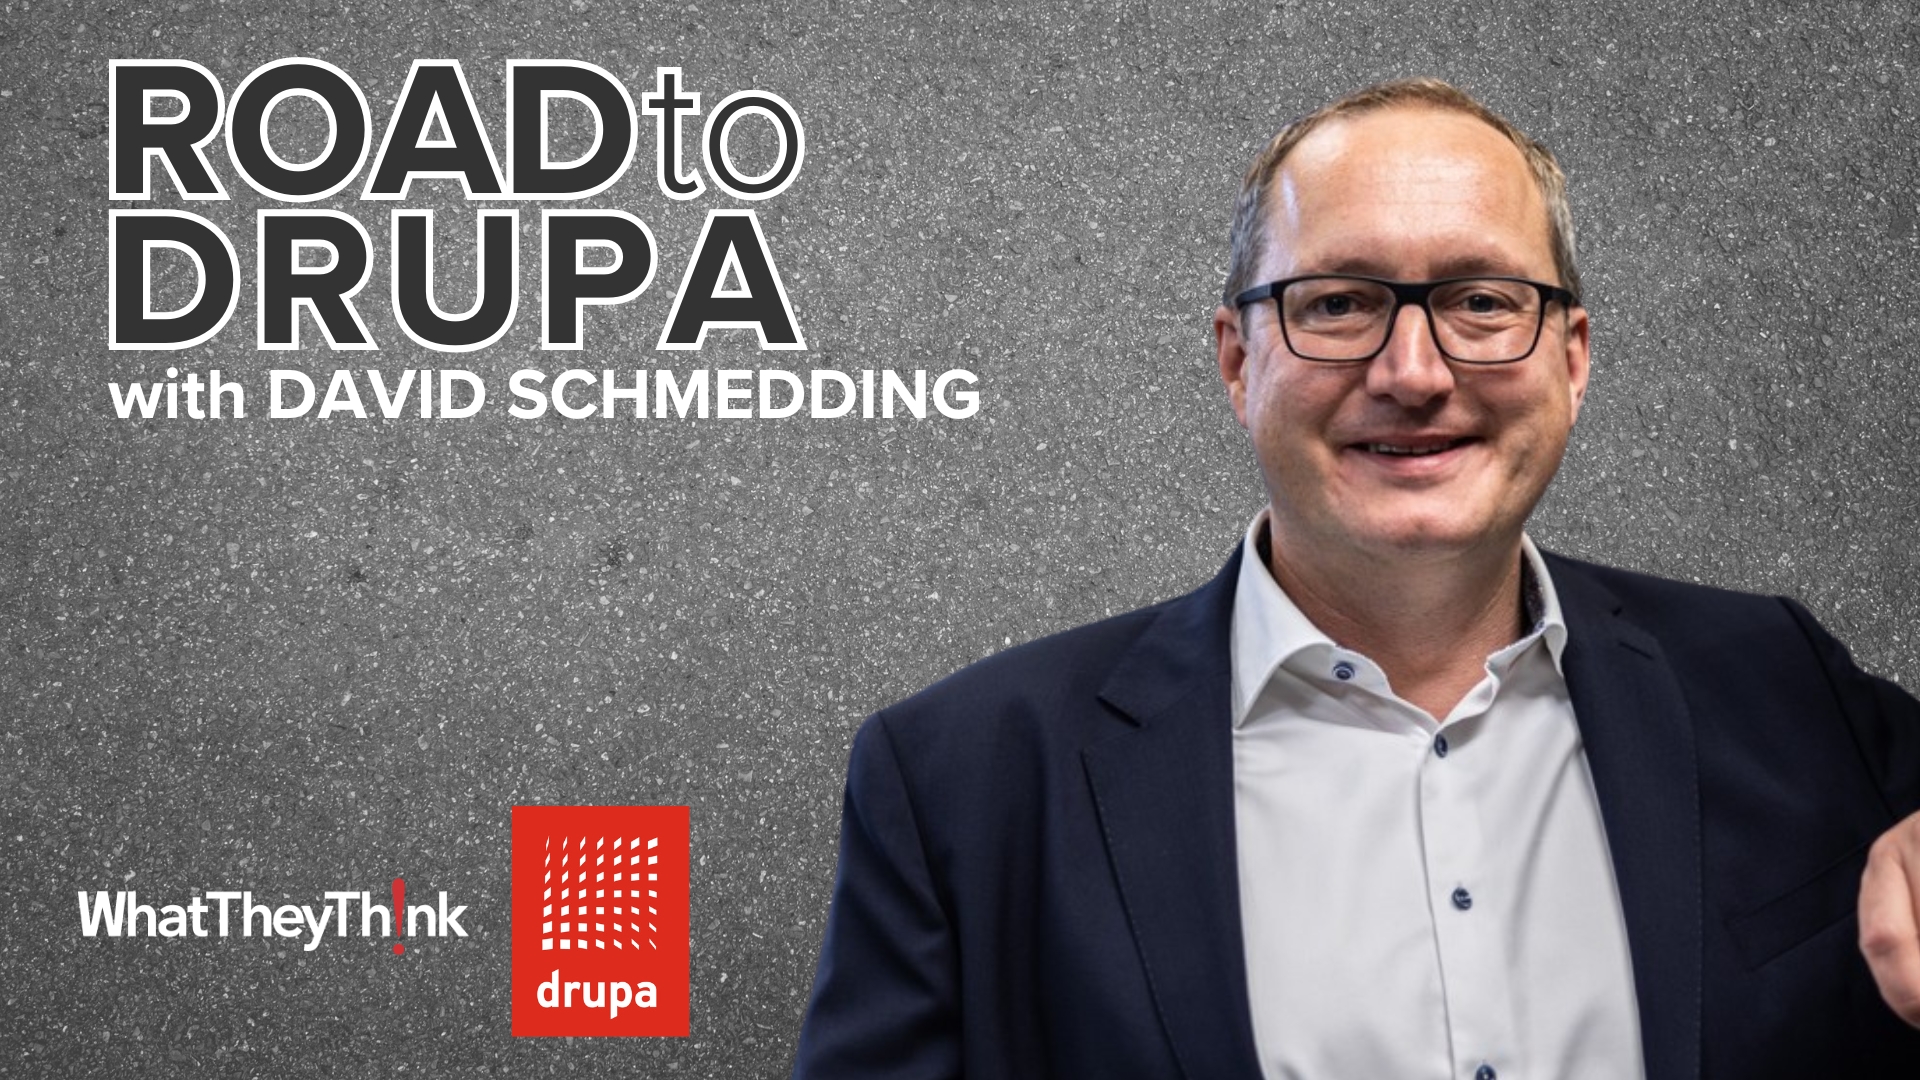 Video preview: Road to drupa: Heidelberg's David Schmedding